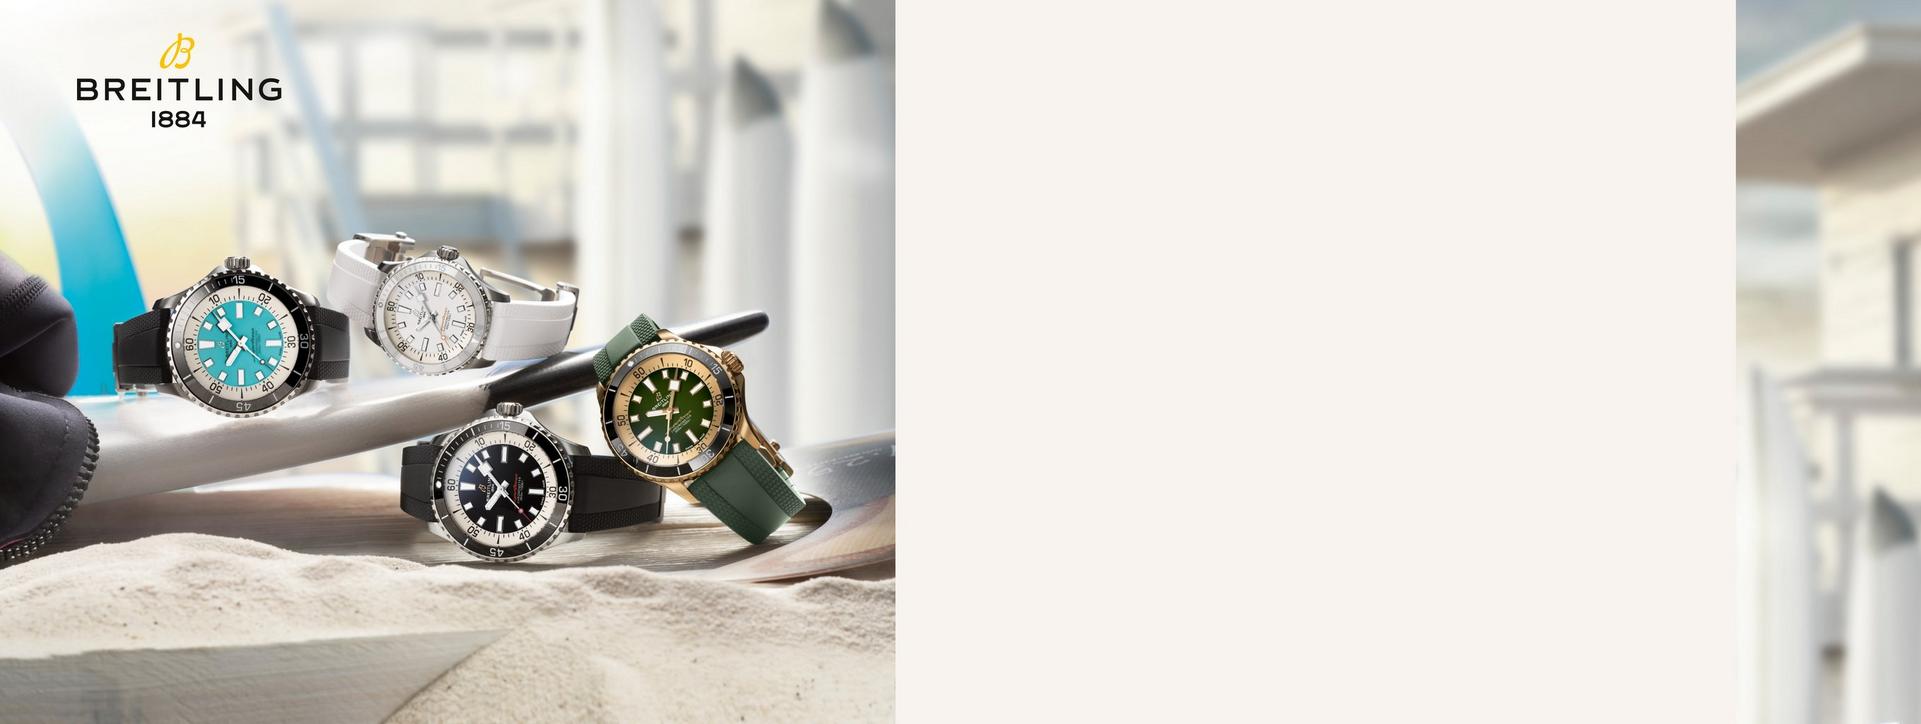 Breitling Watches at Ernest Jones